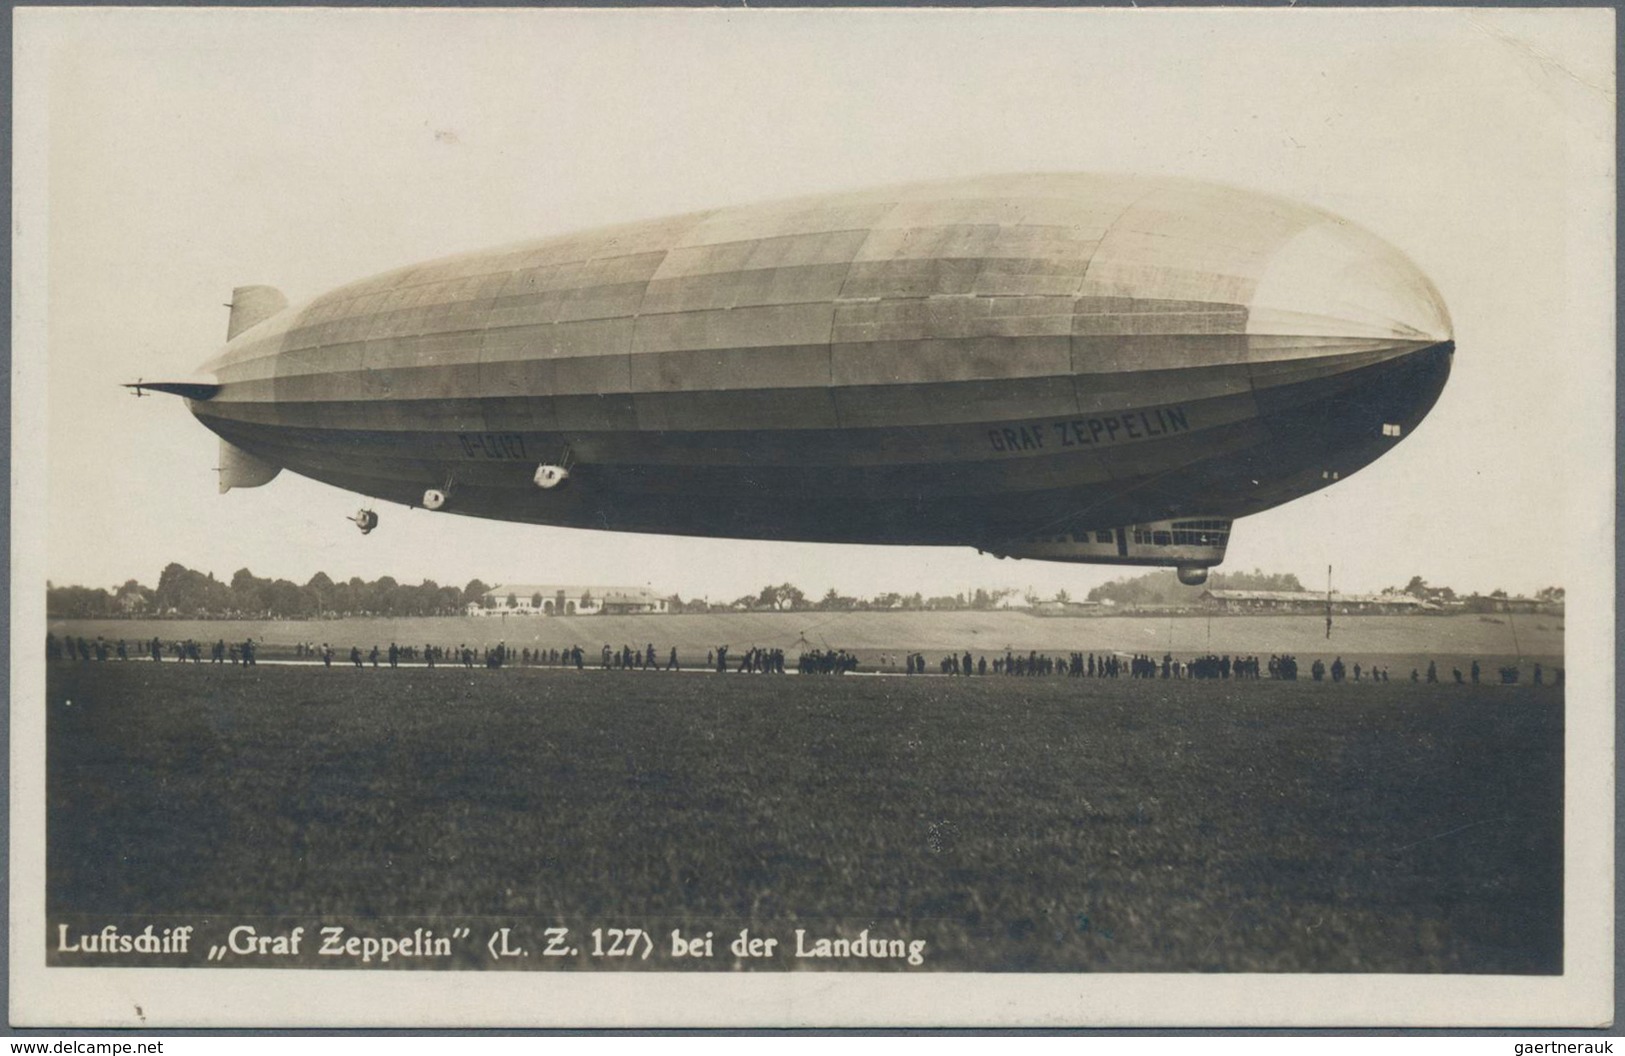 Zeppelinpost Europa: Schweizfahrt 1930, Abwurf St. Gallen, Bordpost 4.7., Passagier-Post, Fotokarte - Europe (Other)